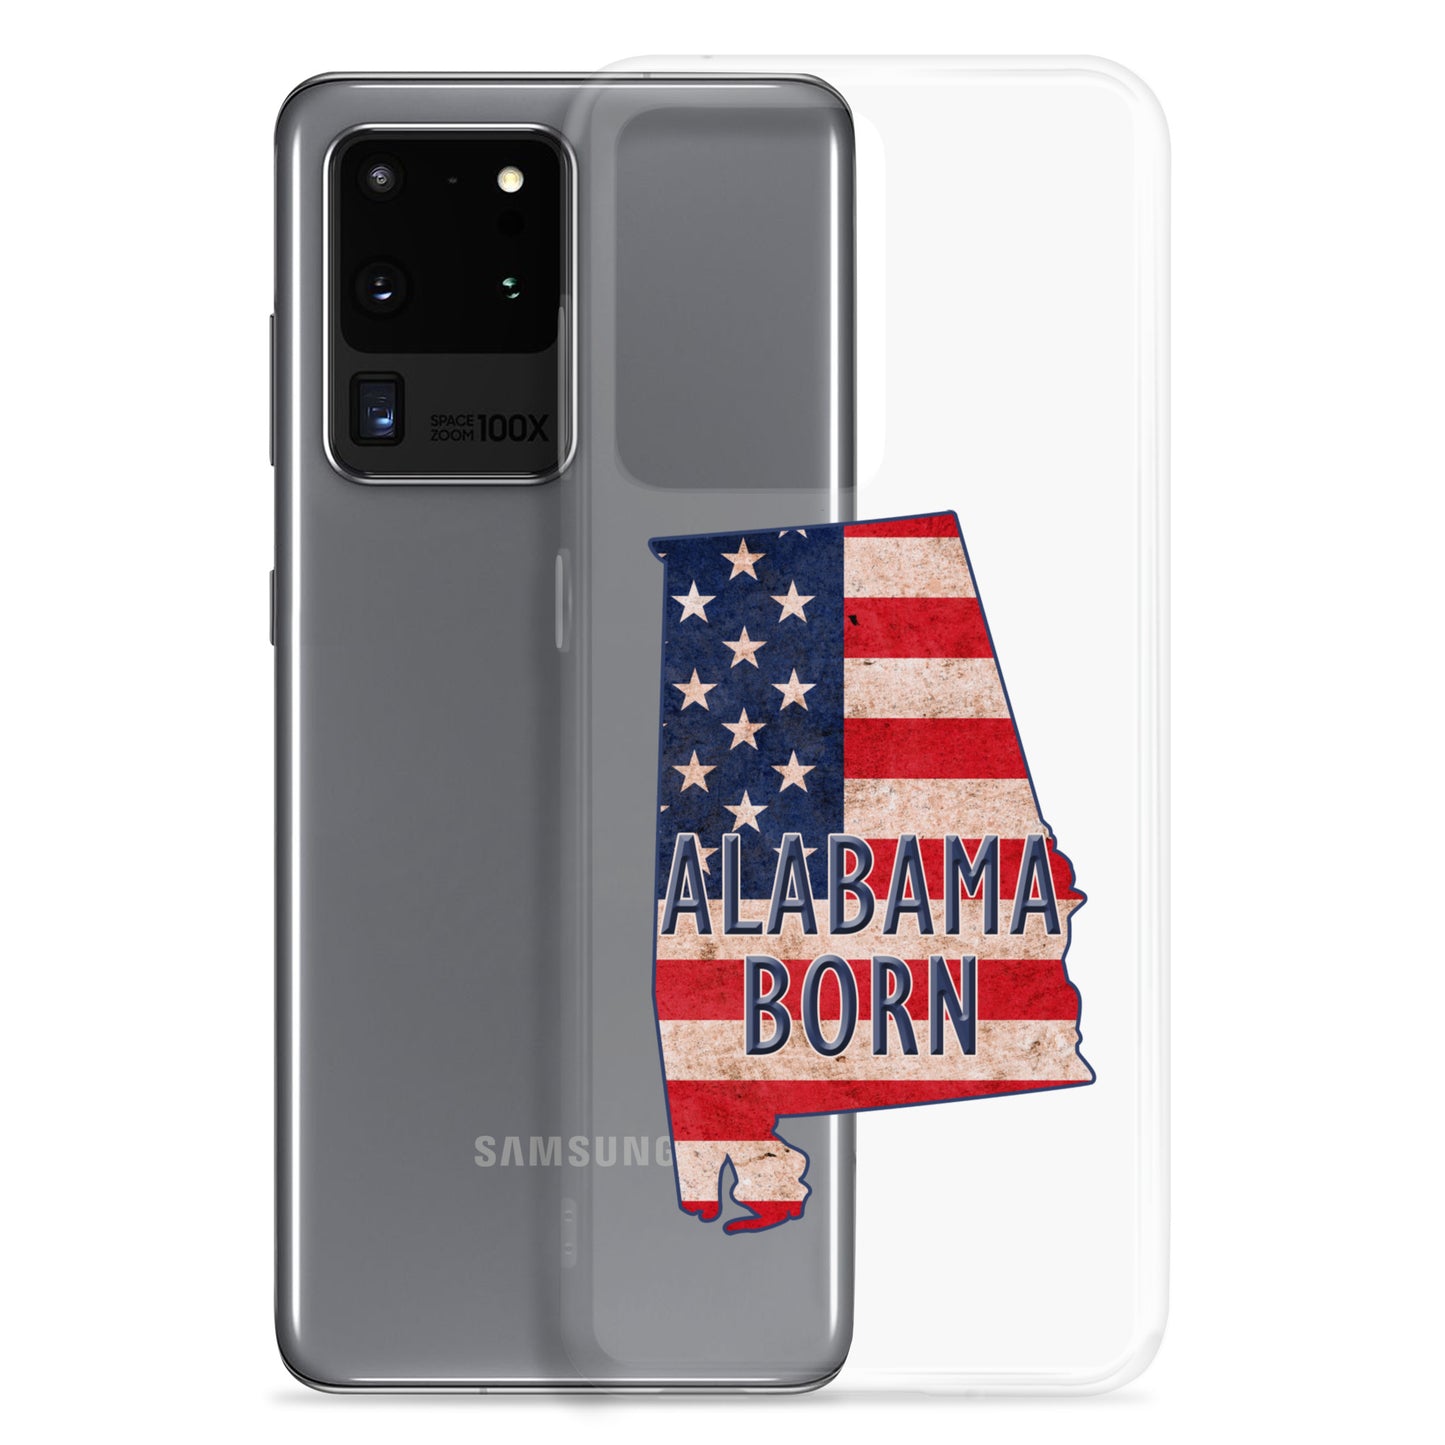 Alabama Samsung Case